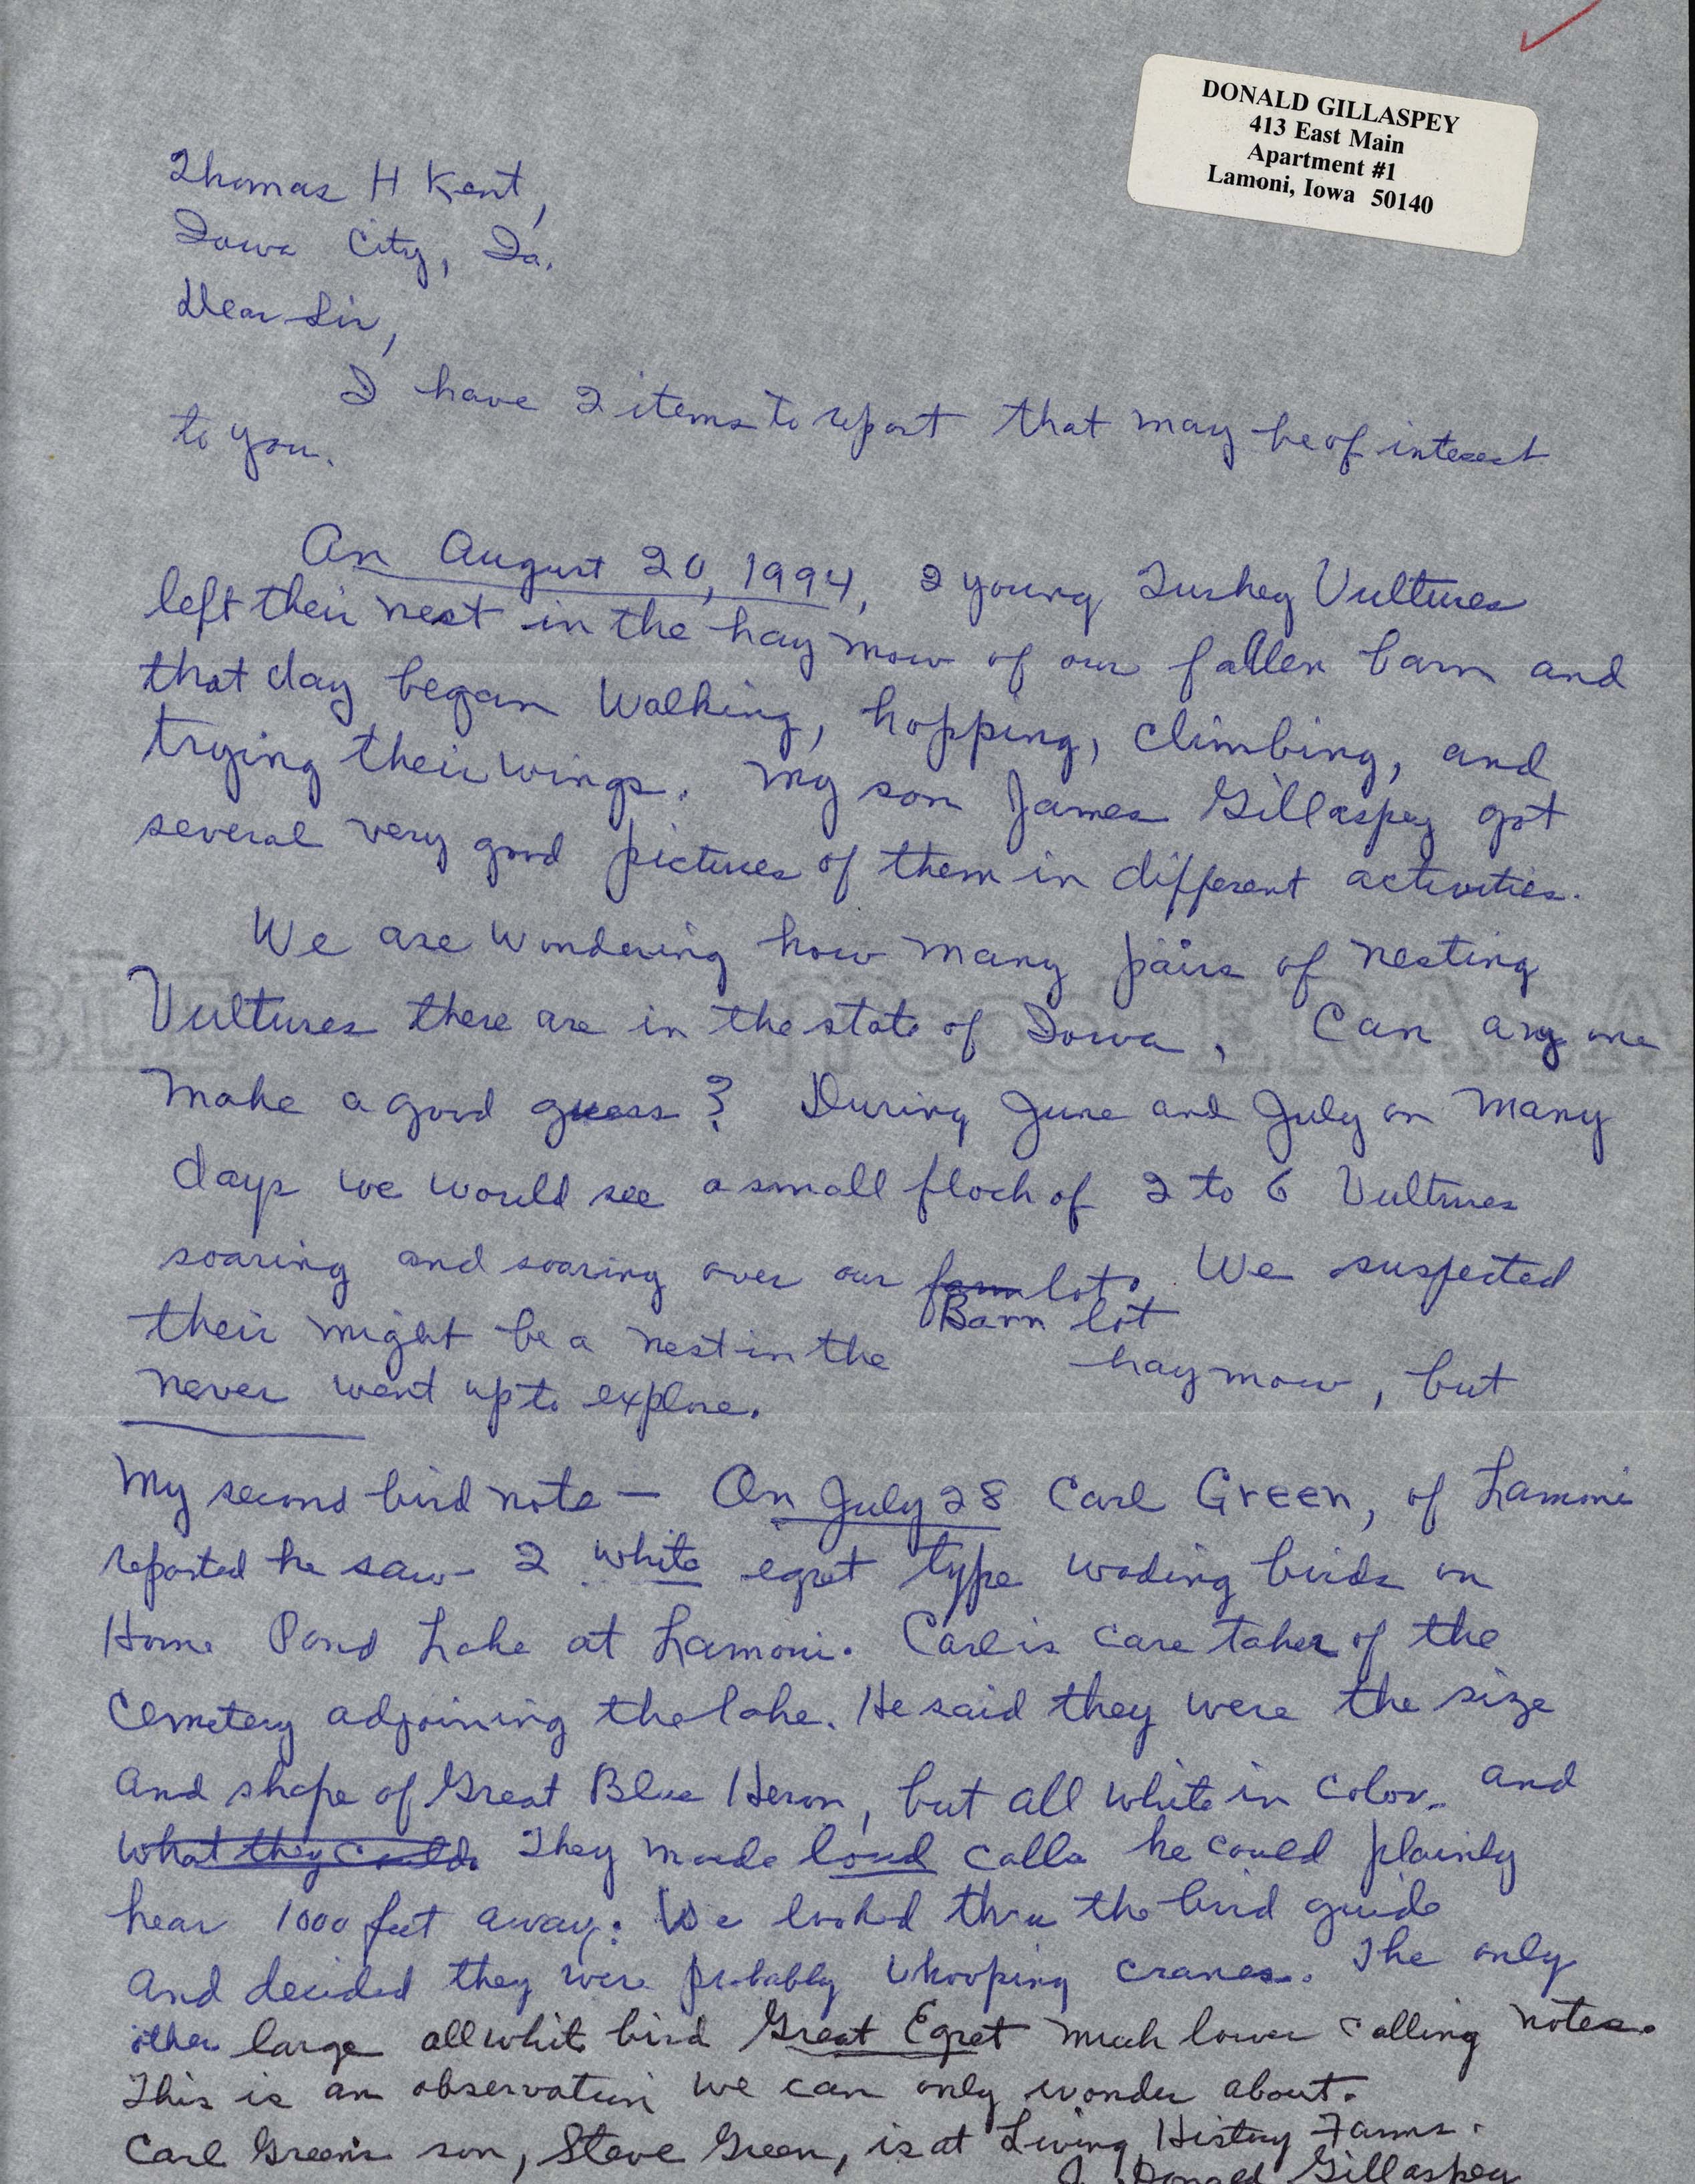 Donald Gillaspey letter to Thomas Kent regarding bird sightings, fall 1994